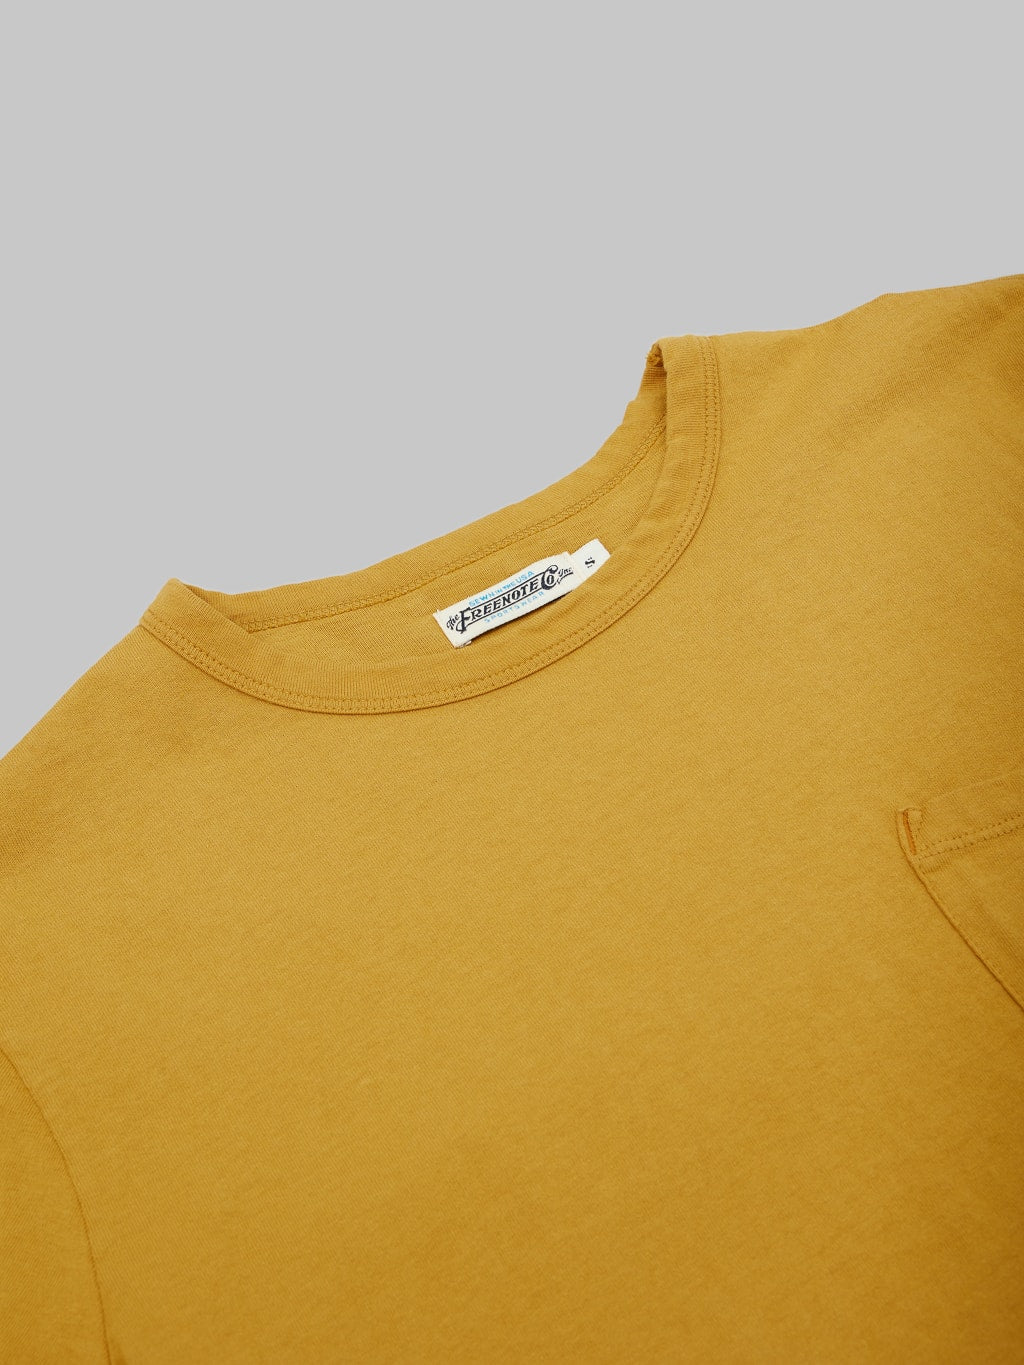 freenote cloth 9 ounce pocket t shirt mustard heavyweight collar